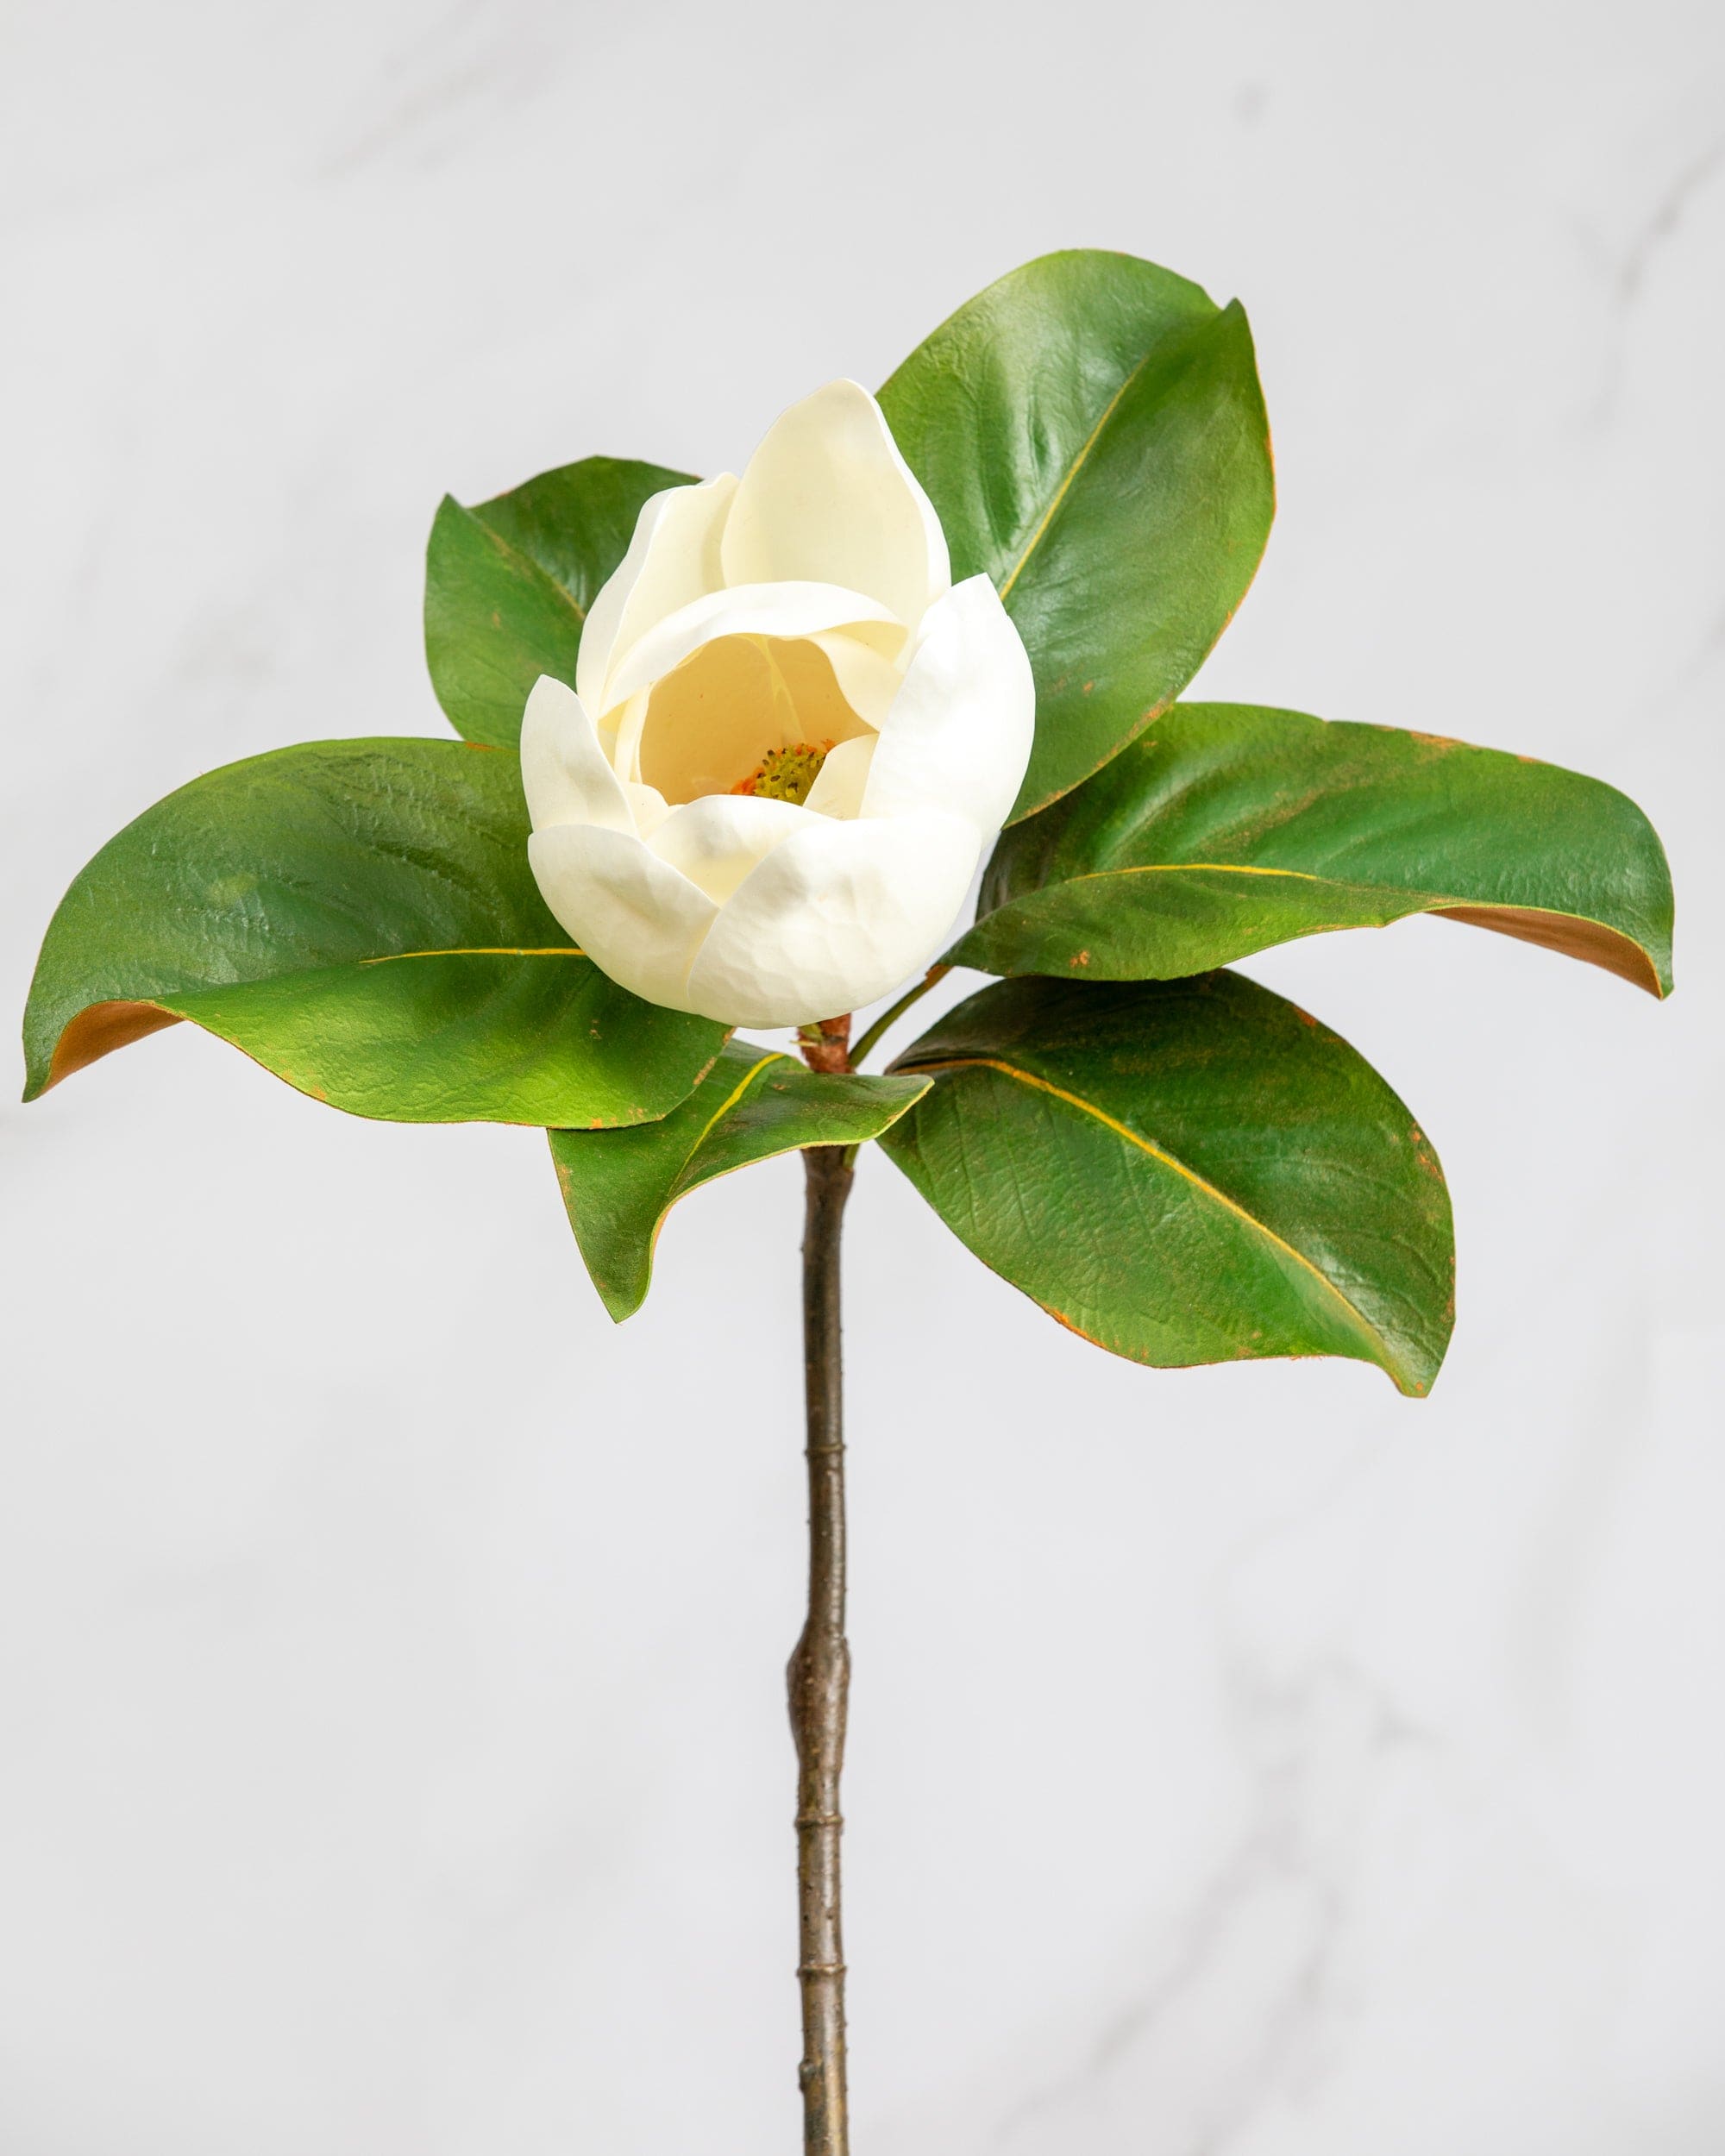 Magnolia Floral Stem, 30